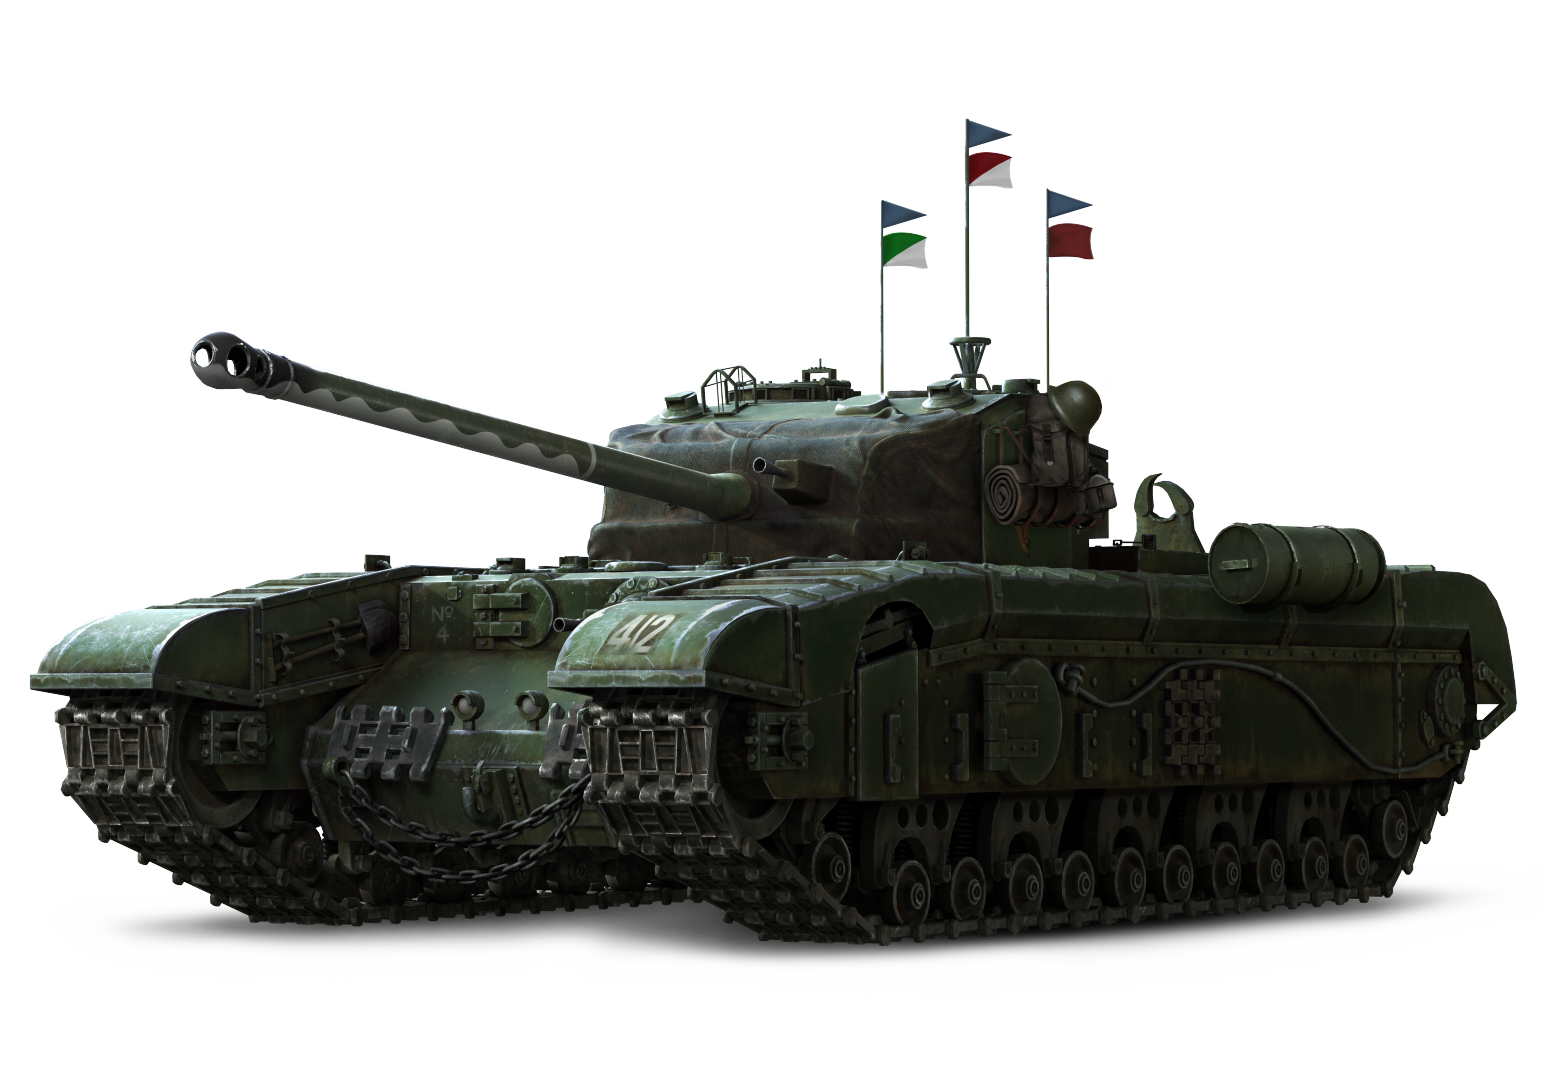 King Sombra - Tank, Infantry, Black Prince (A43) by AlVchFokarev